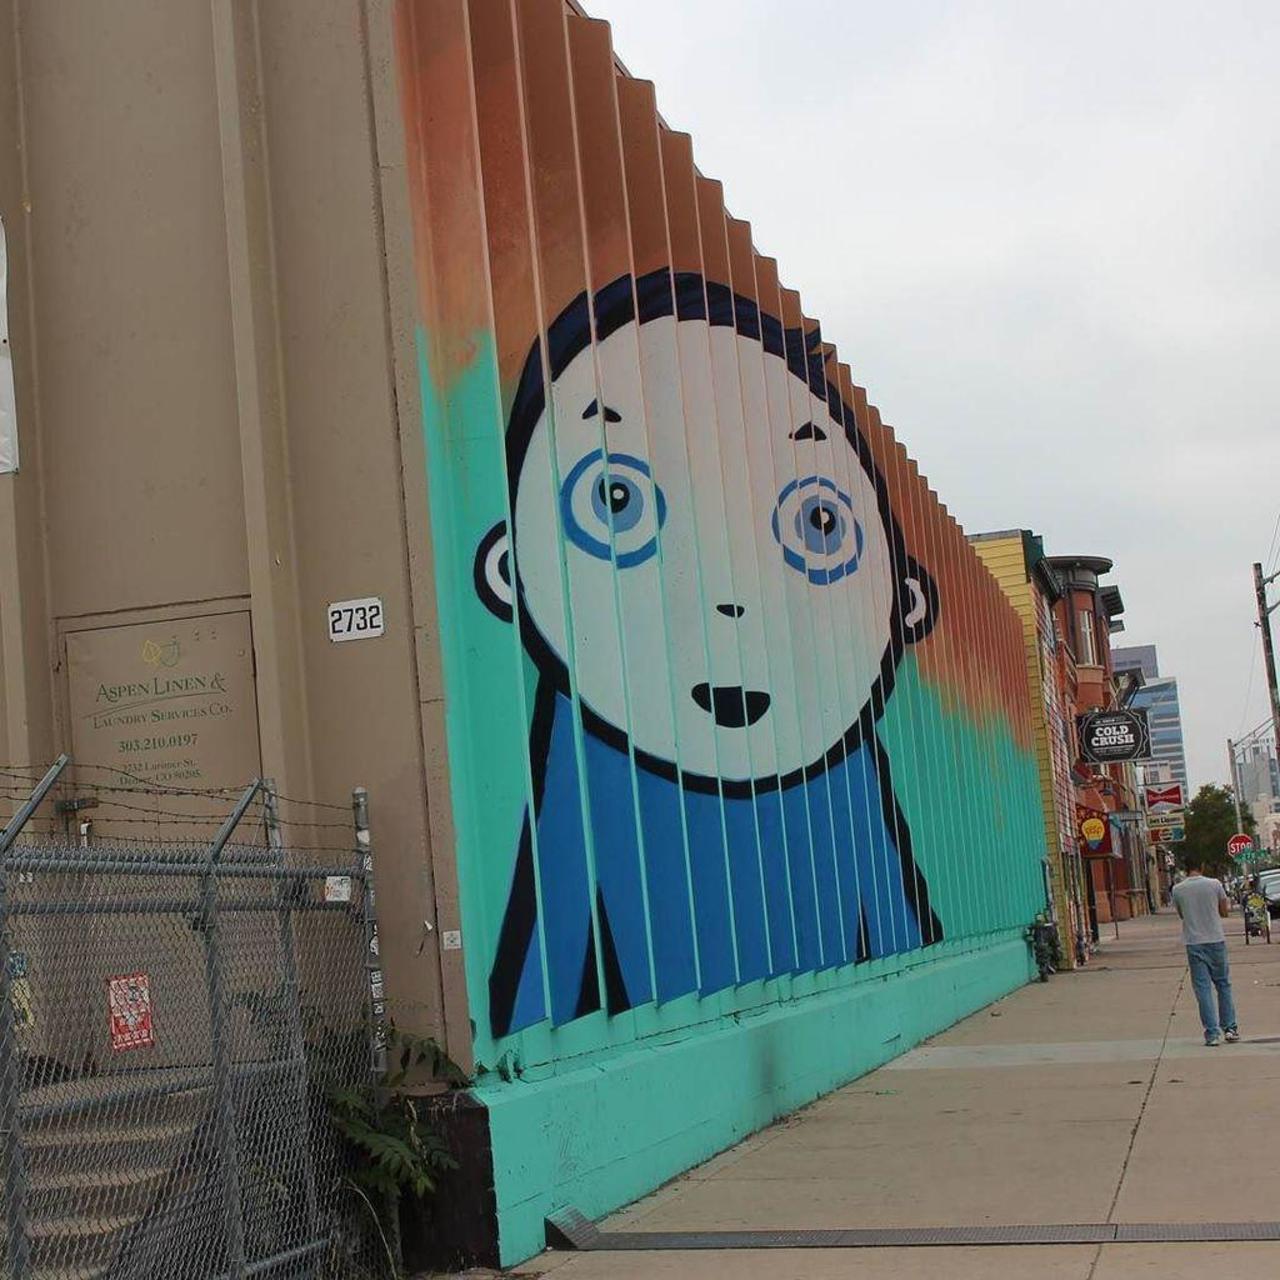 RT @artpushr: via #ham_sandwich_111 "http://bit.ly/1G2ijN5" #graffiti #streetart http://t.co/xgIPDOmFPY